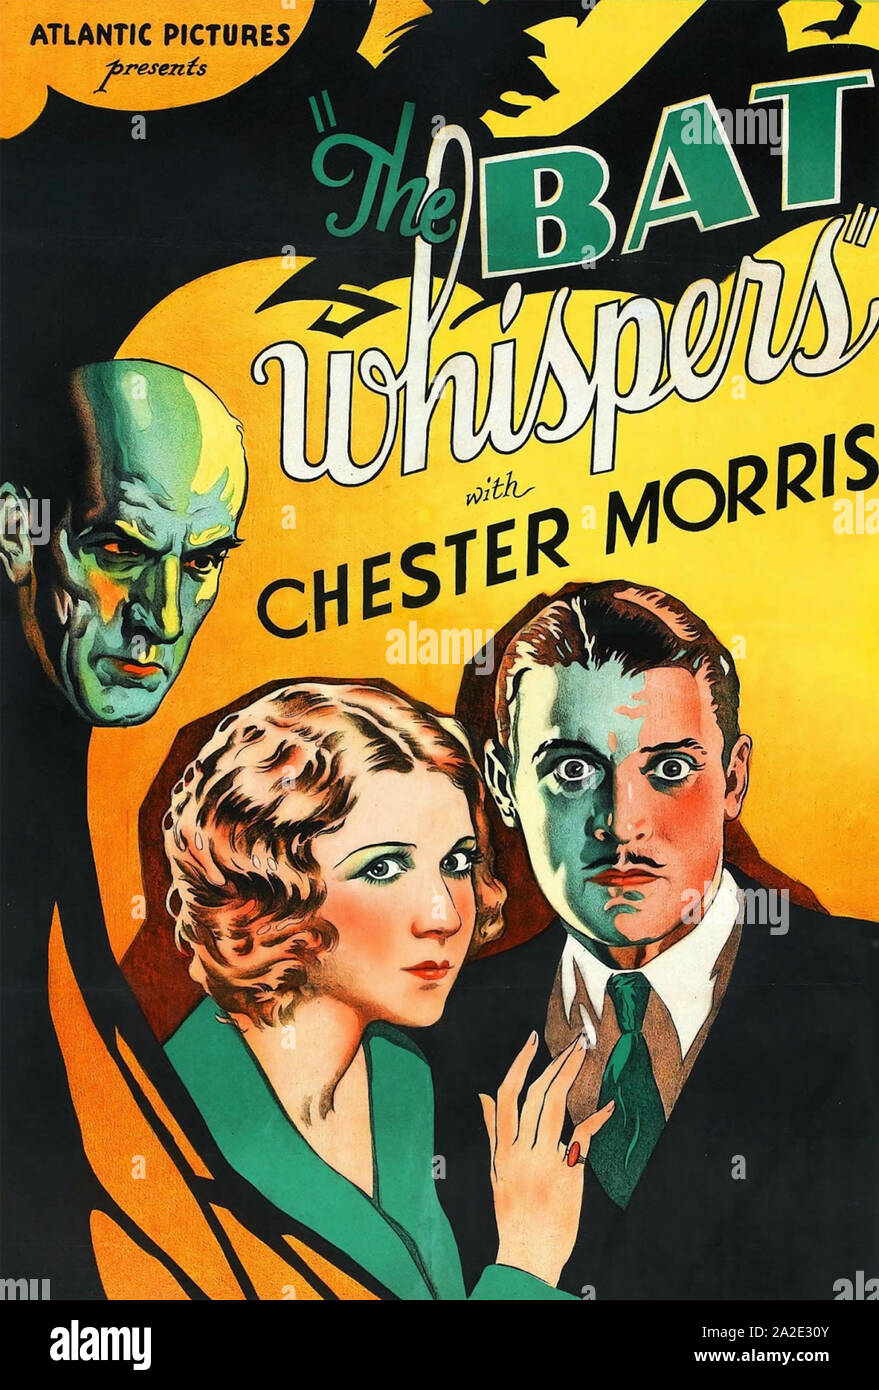 THE BAT WHISPERS 1930 United Artists film avec Chester Morris et Una Merkel Banque D'Images